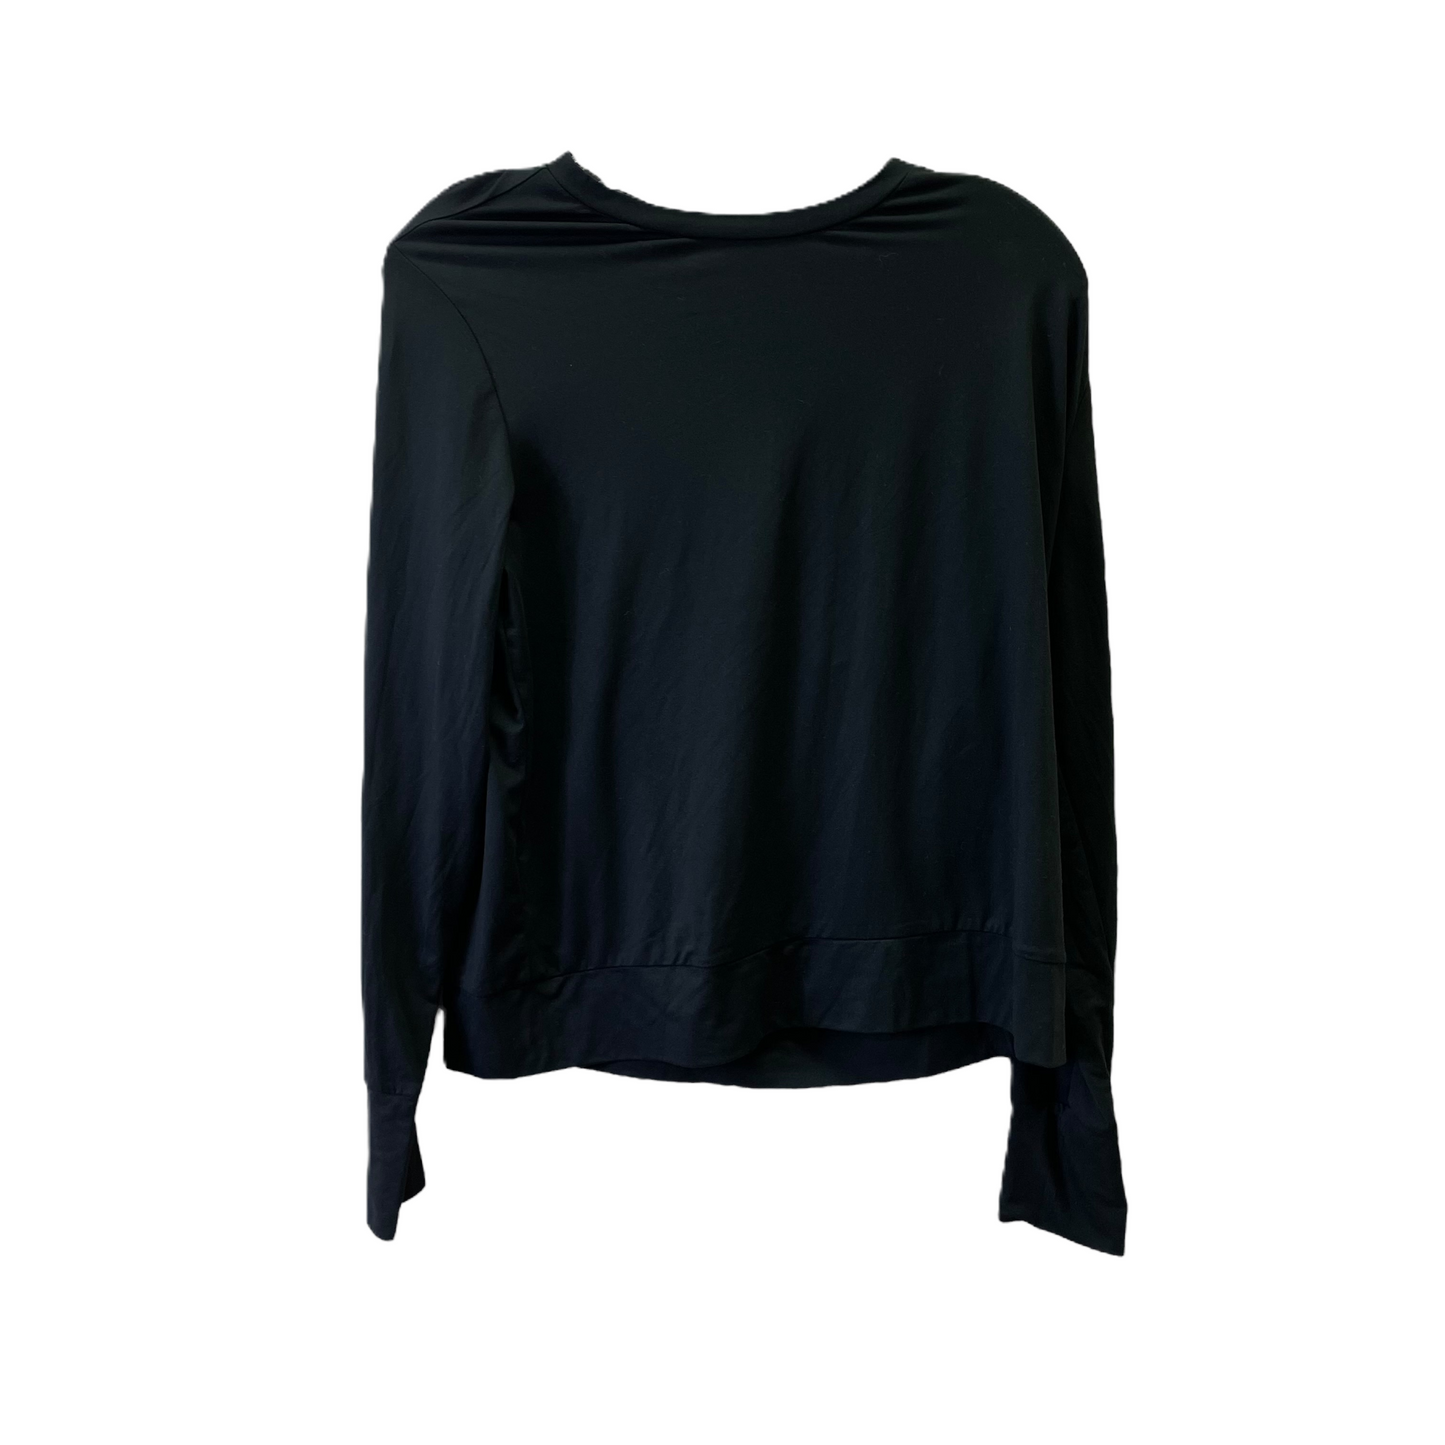 Black Top Long Sleeve Basic By Lukka, Size: M